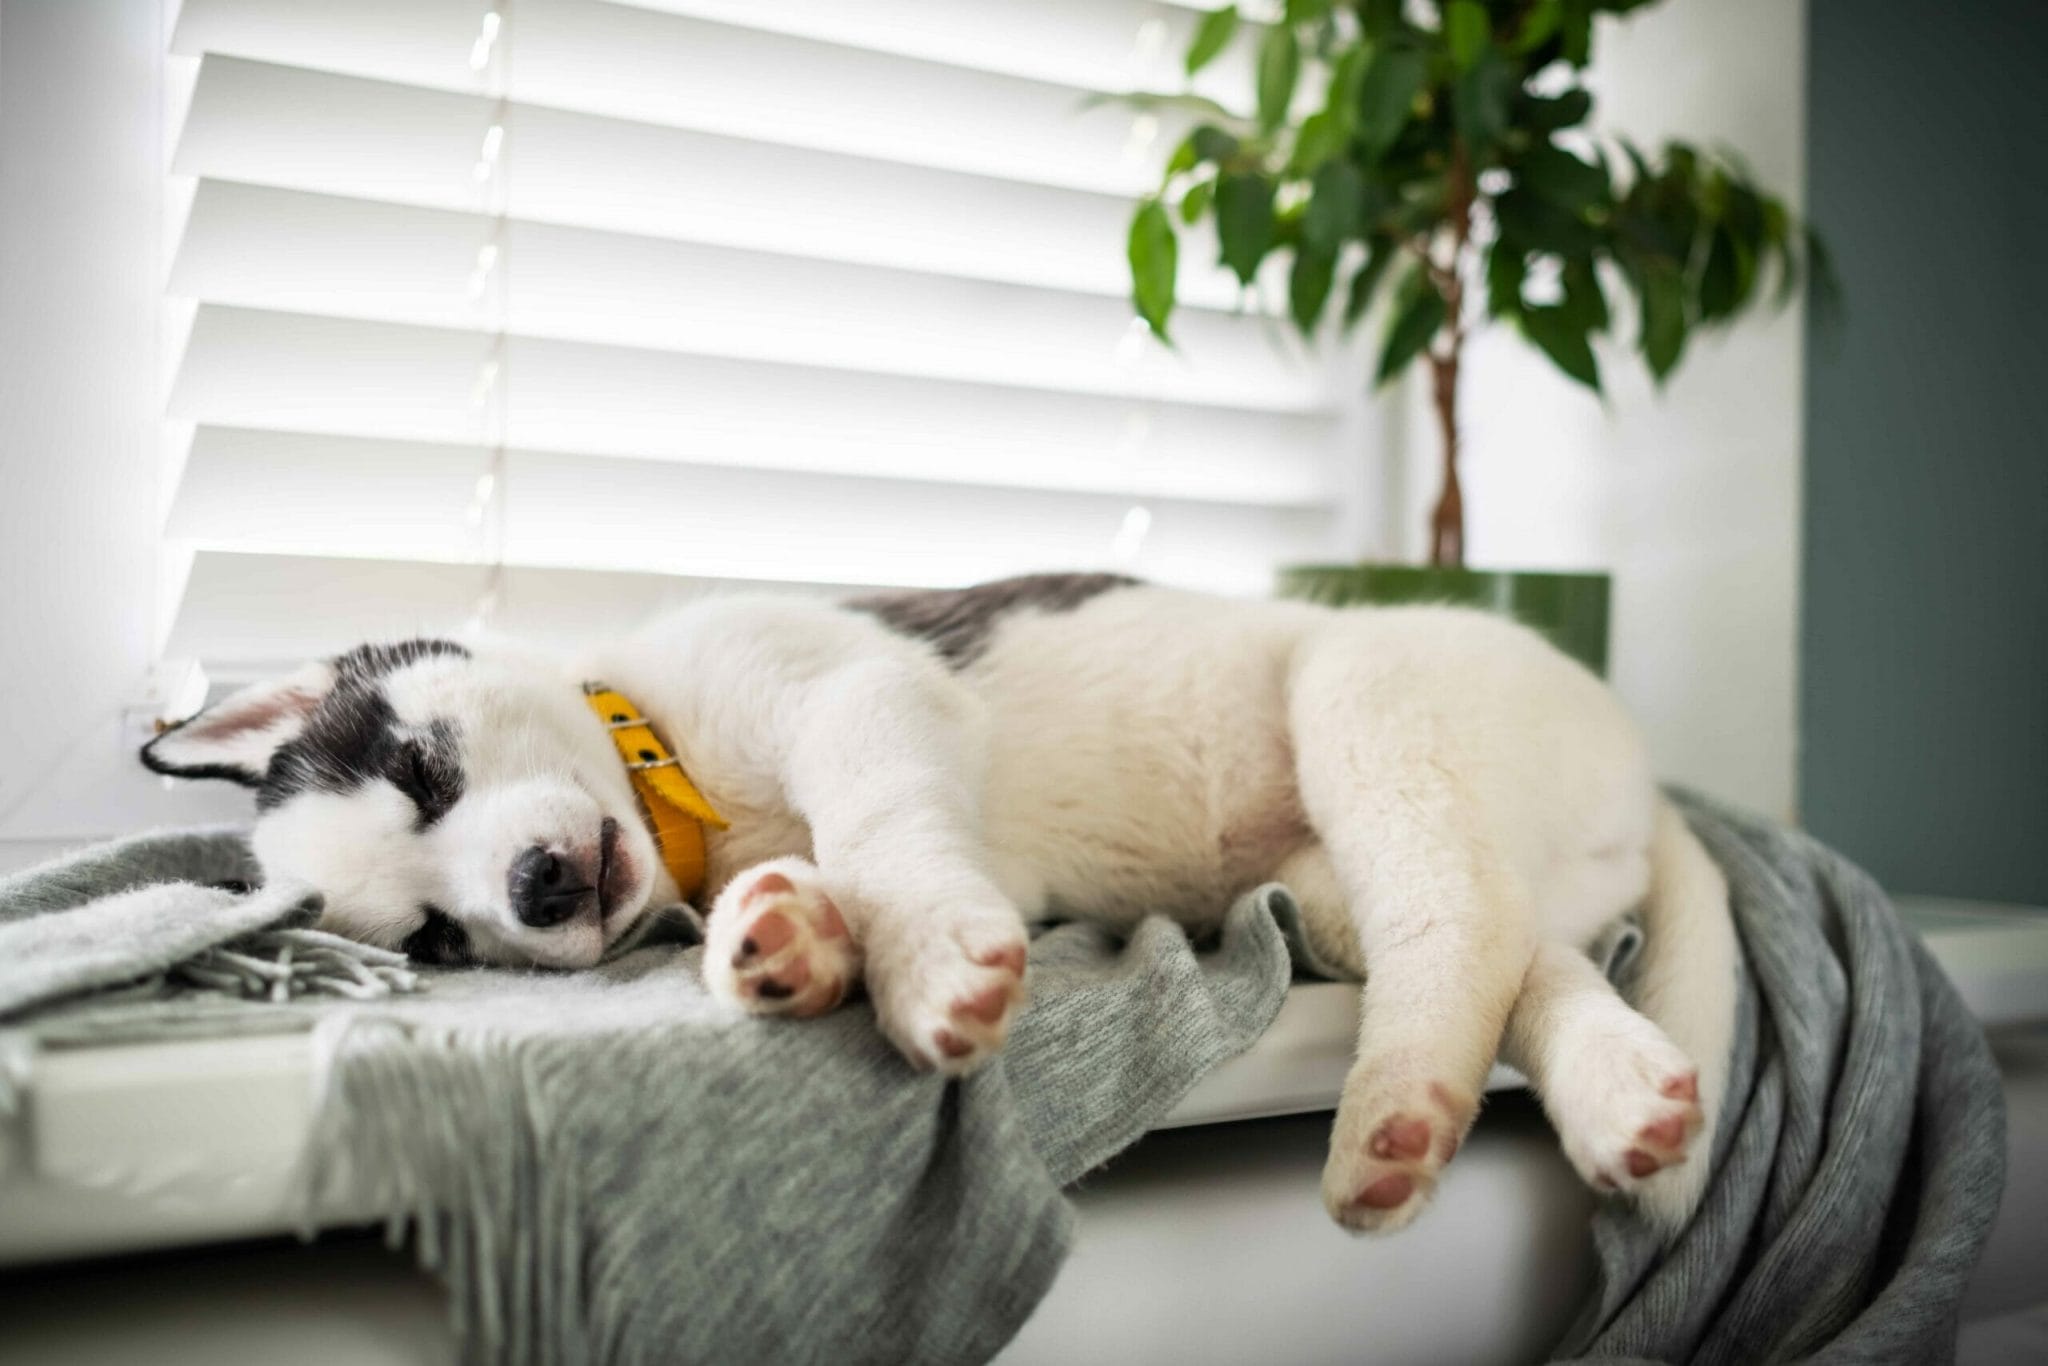 Where do huskies sleep?